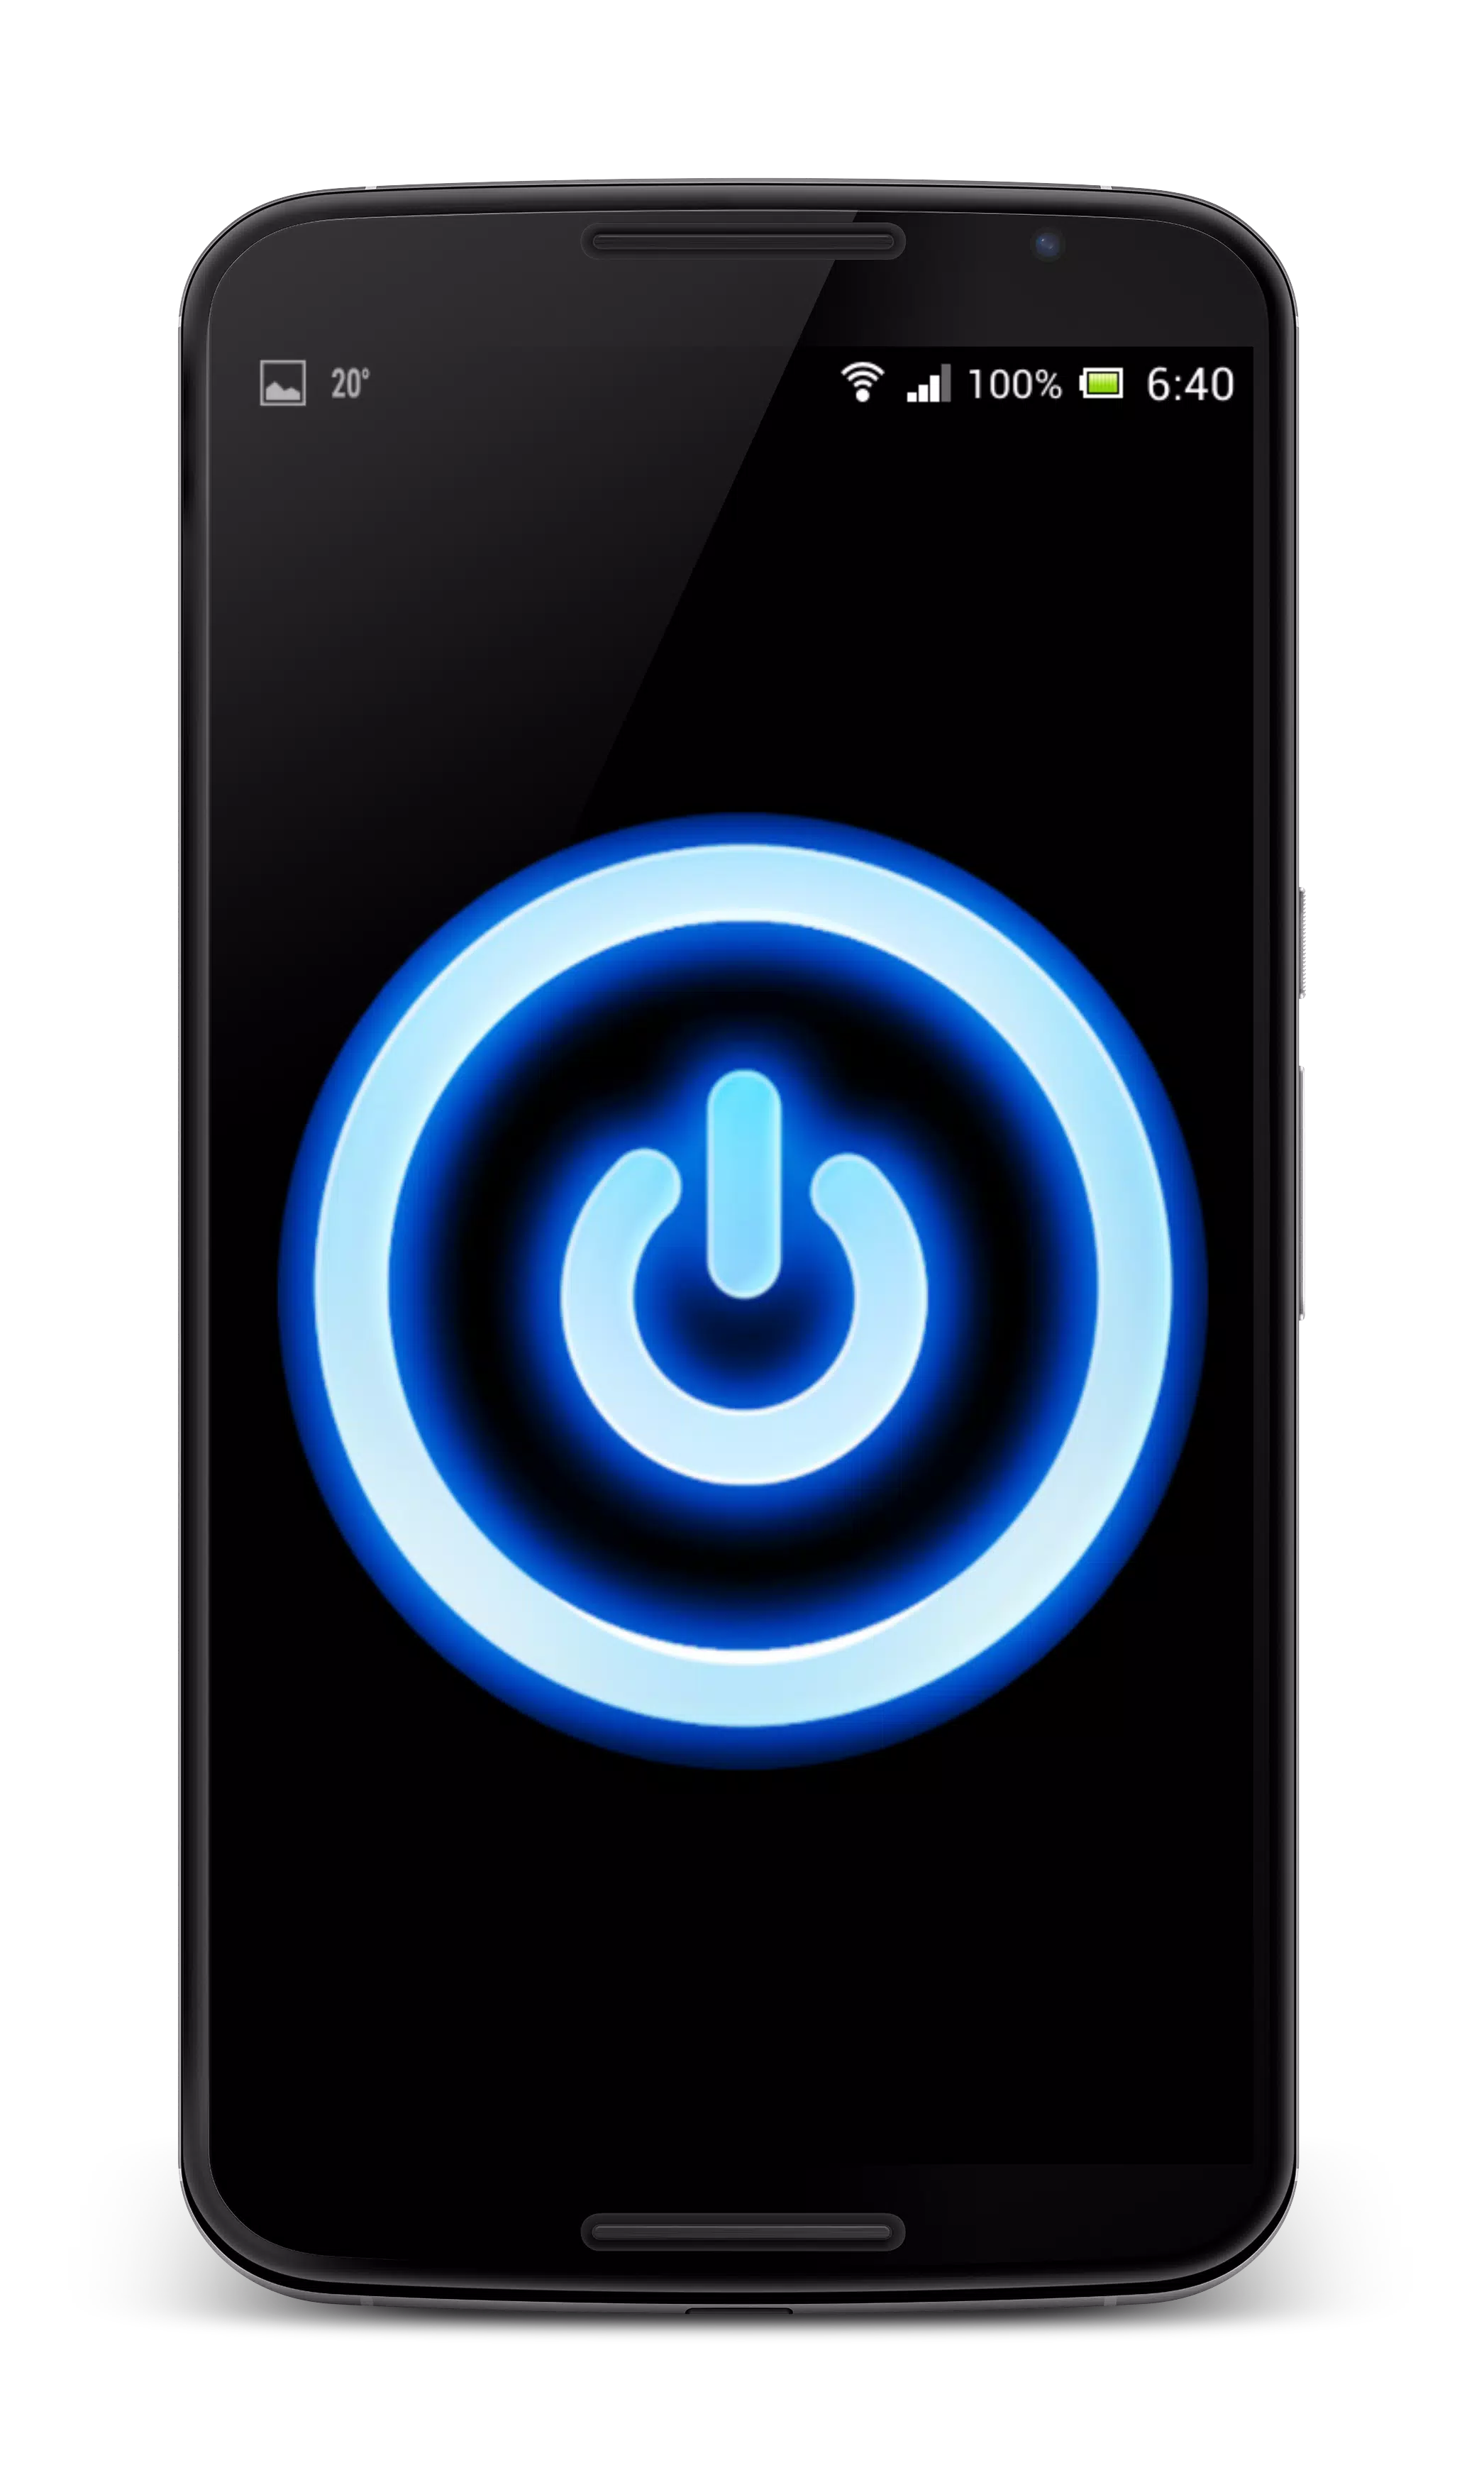 Descarga de APK de lampara gratis para Android